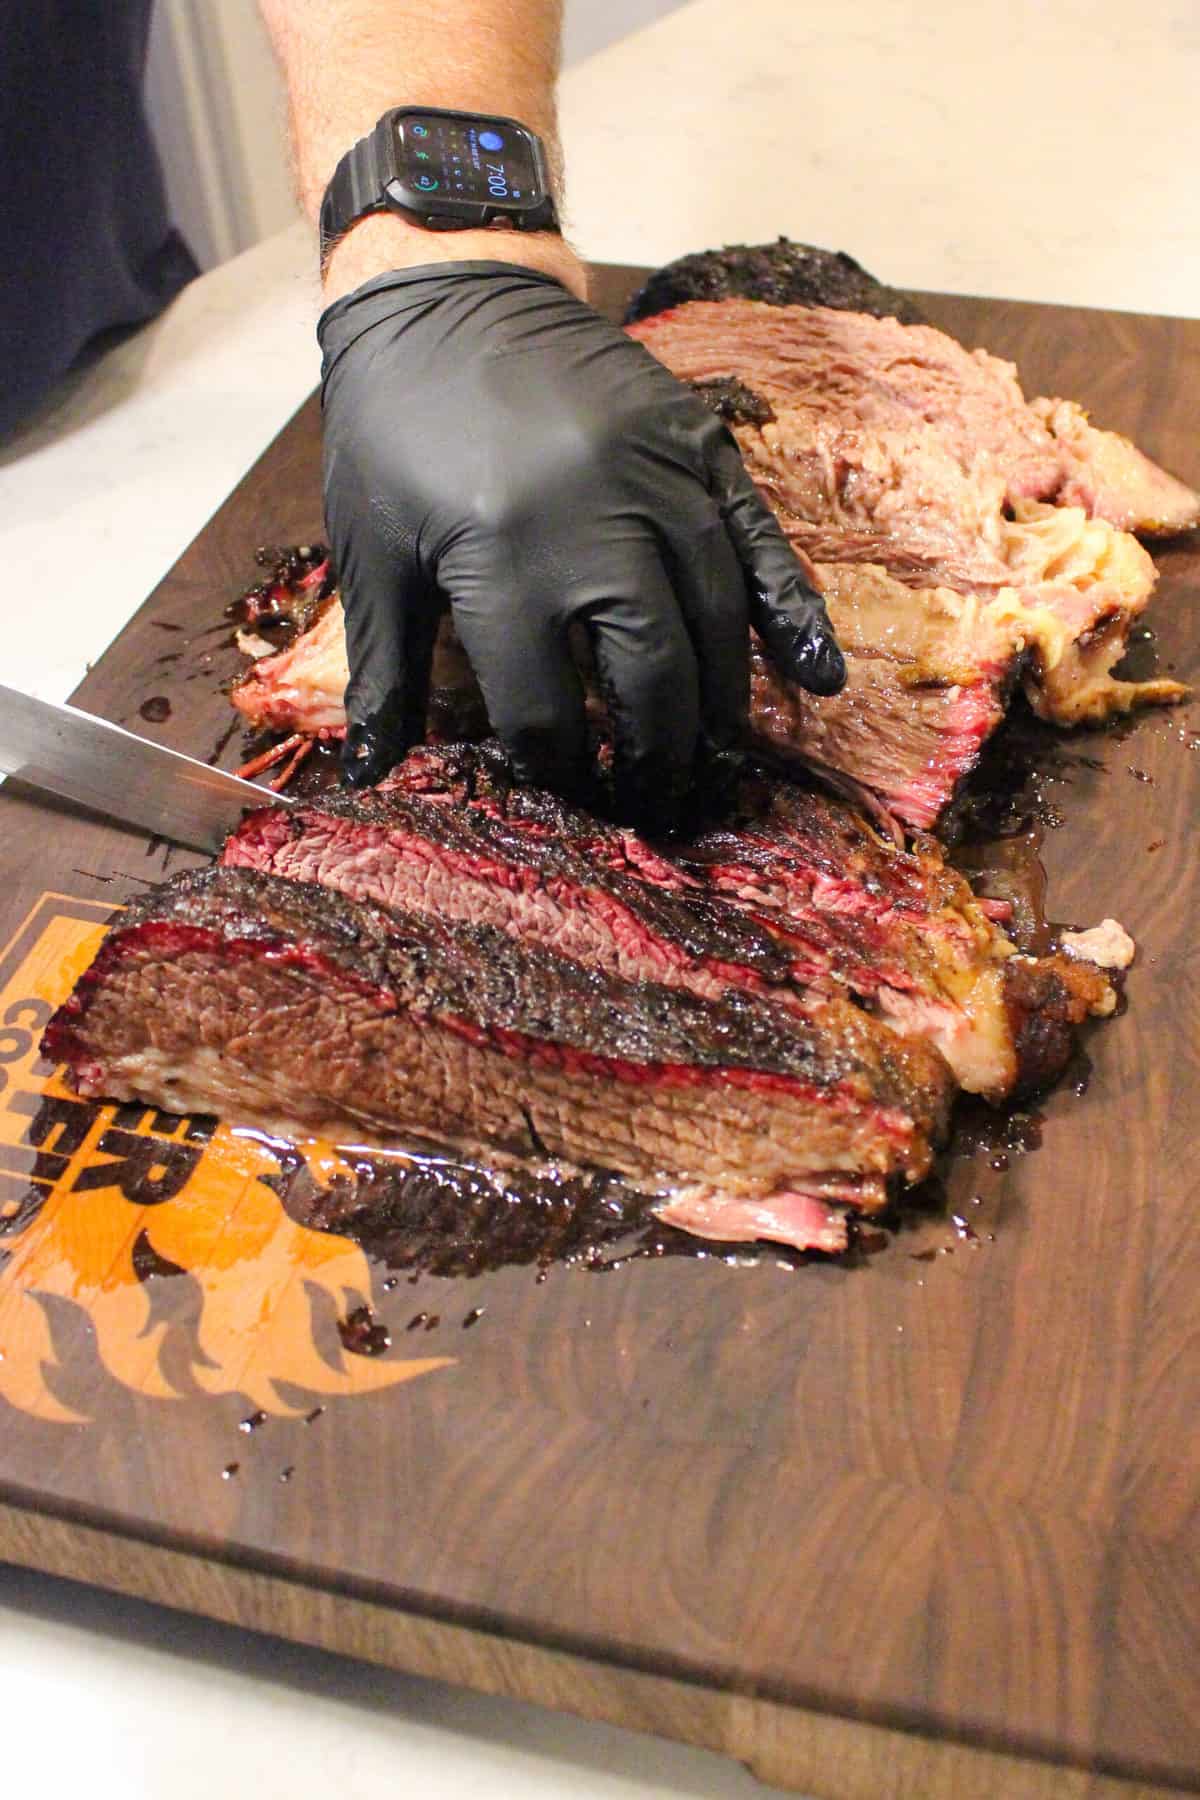 The beef brisket being sliced.